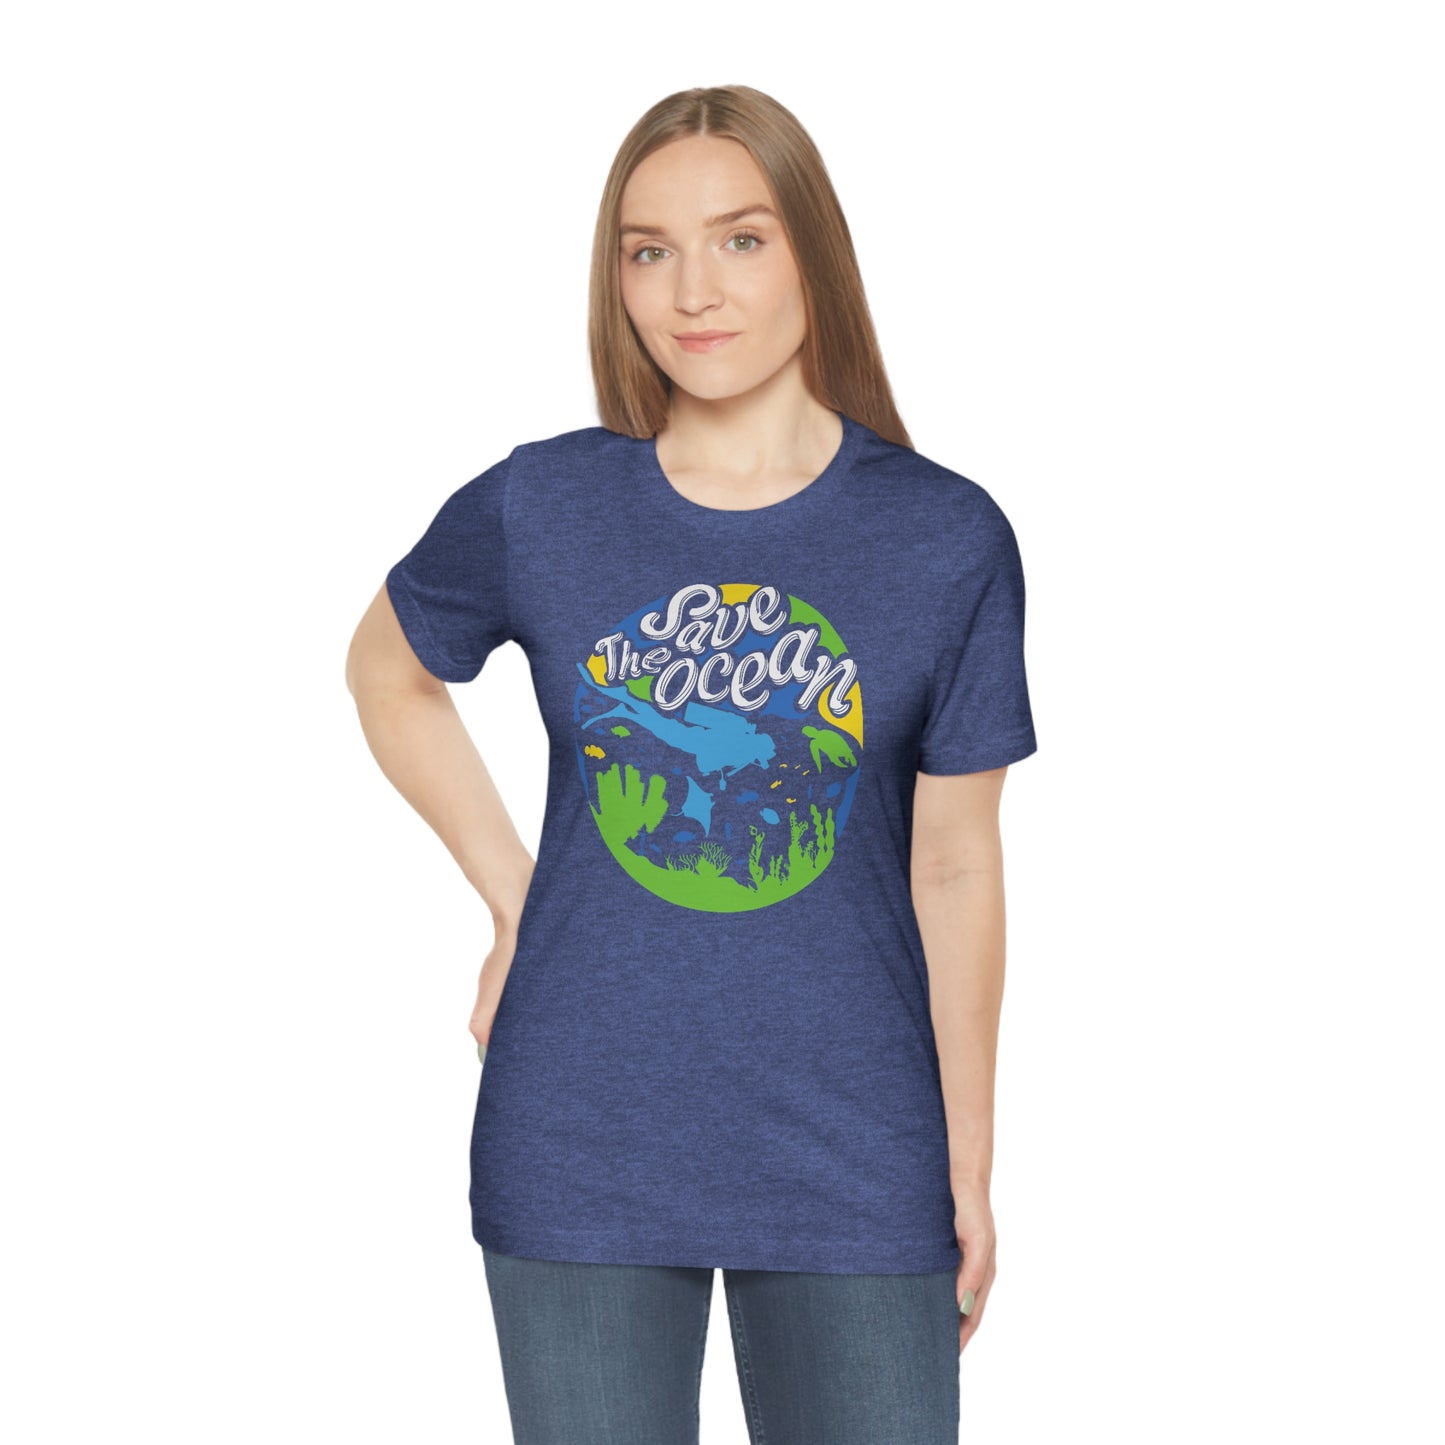 Save The Ocean Tshirt, Diving Conservation Turtles Sea Art Environmental Men Women Adult Aesthetic Graphic Crewneck Tee Shirt Top